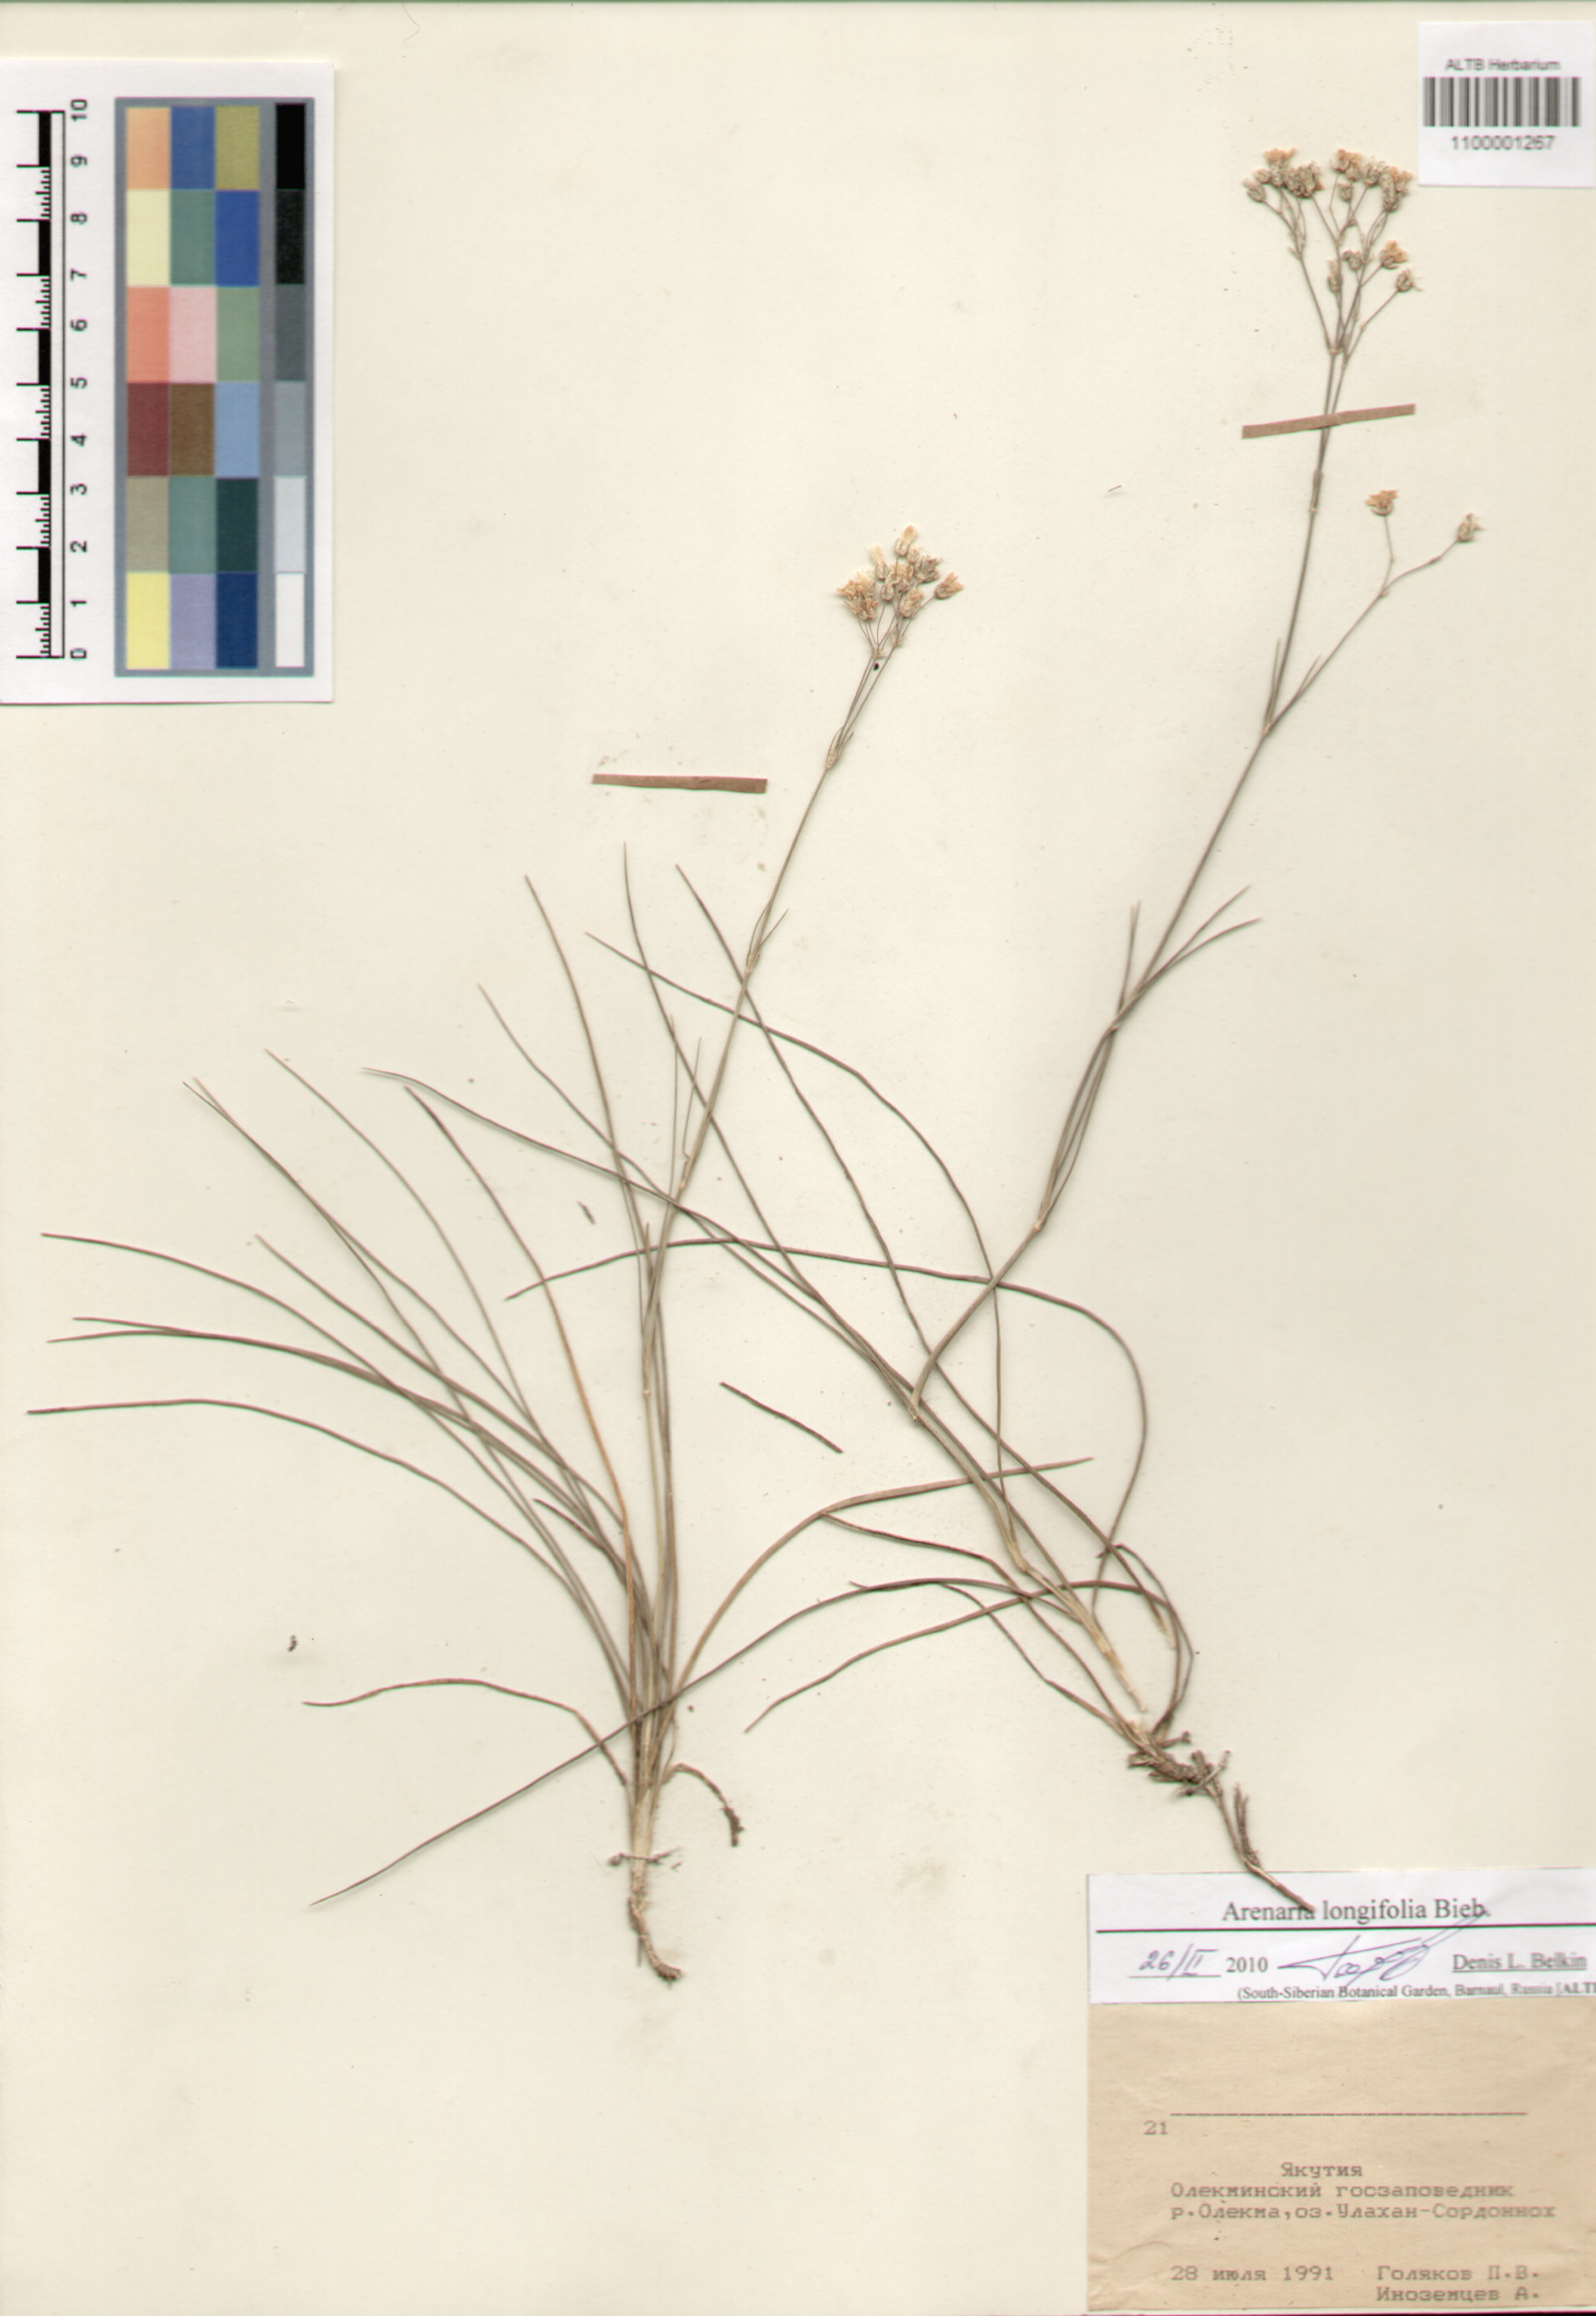 Caryophyllaceae,Arenaria longifolia Bieb.